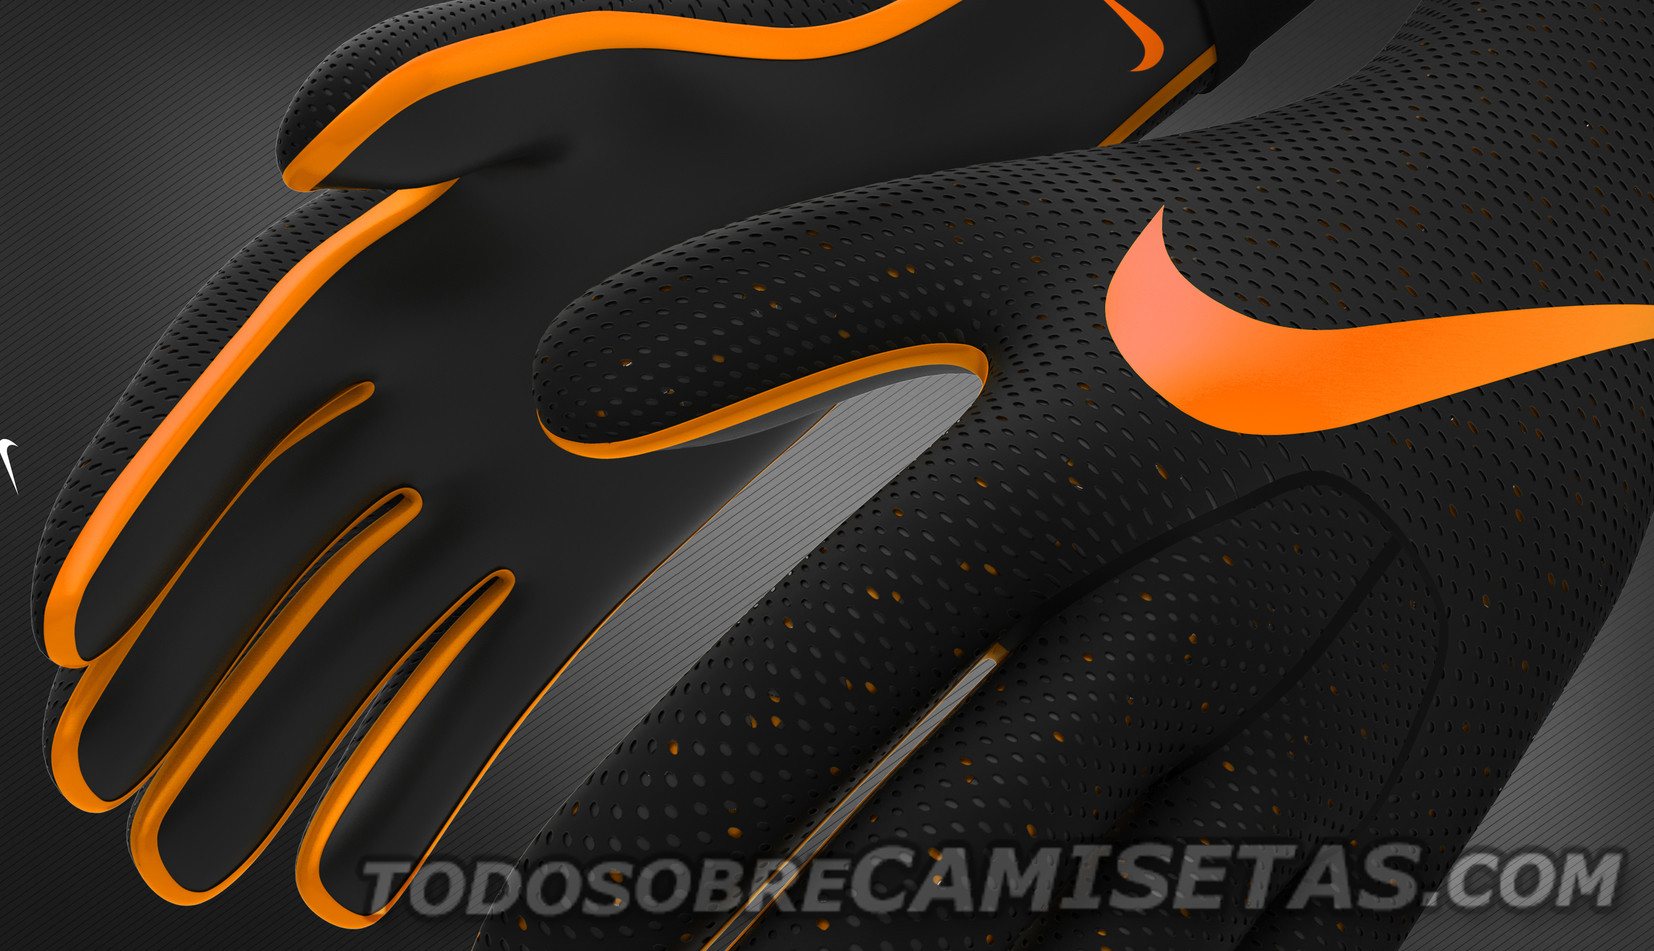 carpintero pompa lanzamiento OFICIAL: Nike Mercurial Touch Elite Gloves - Todo Sobre Camisetas